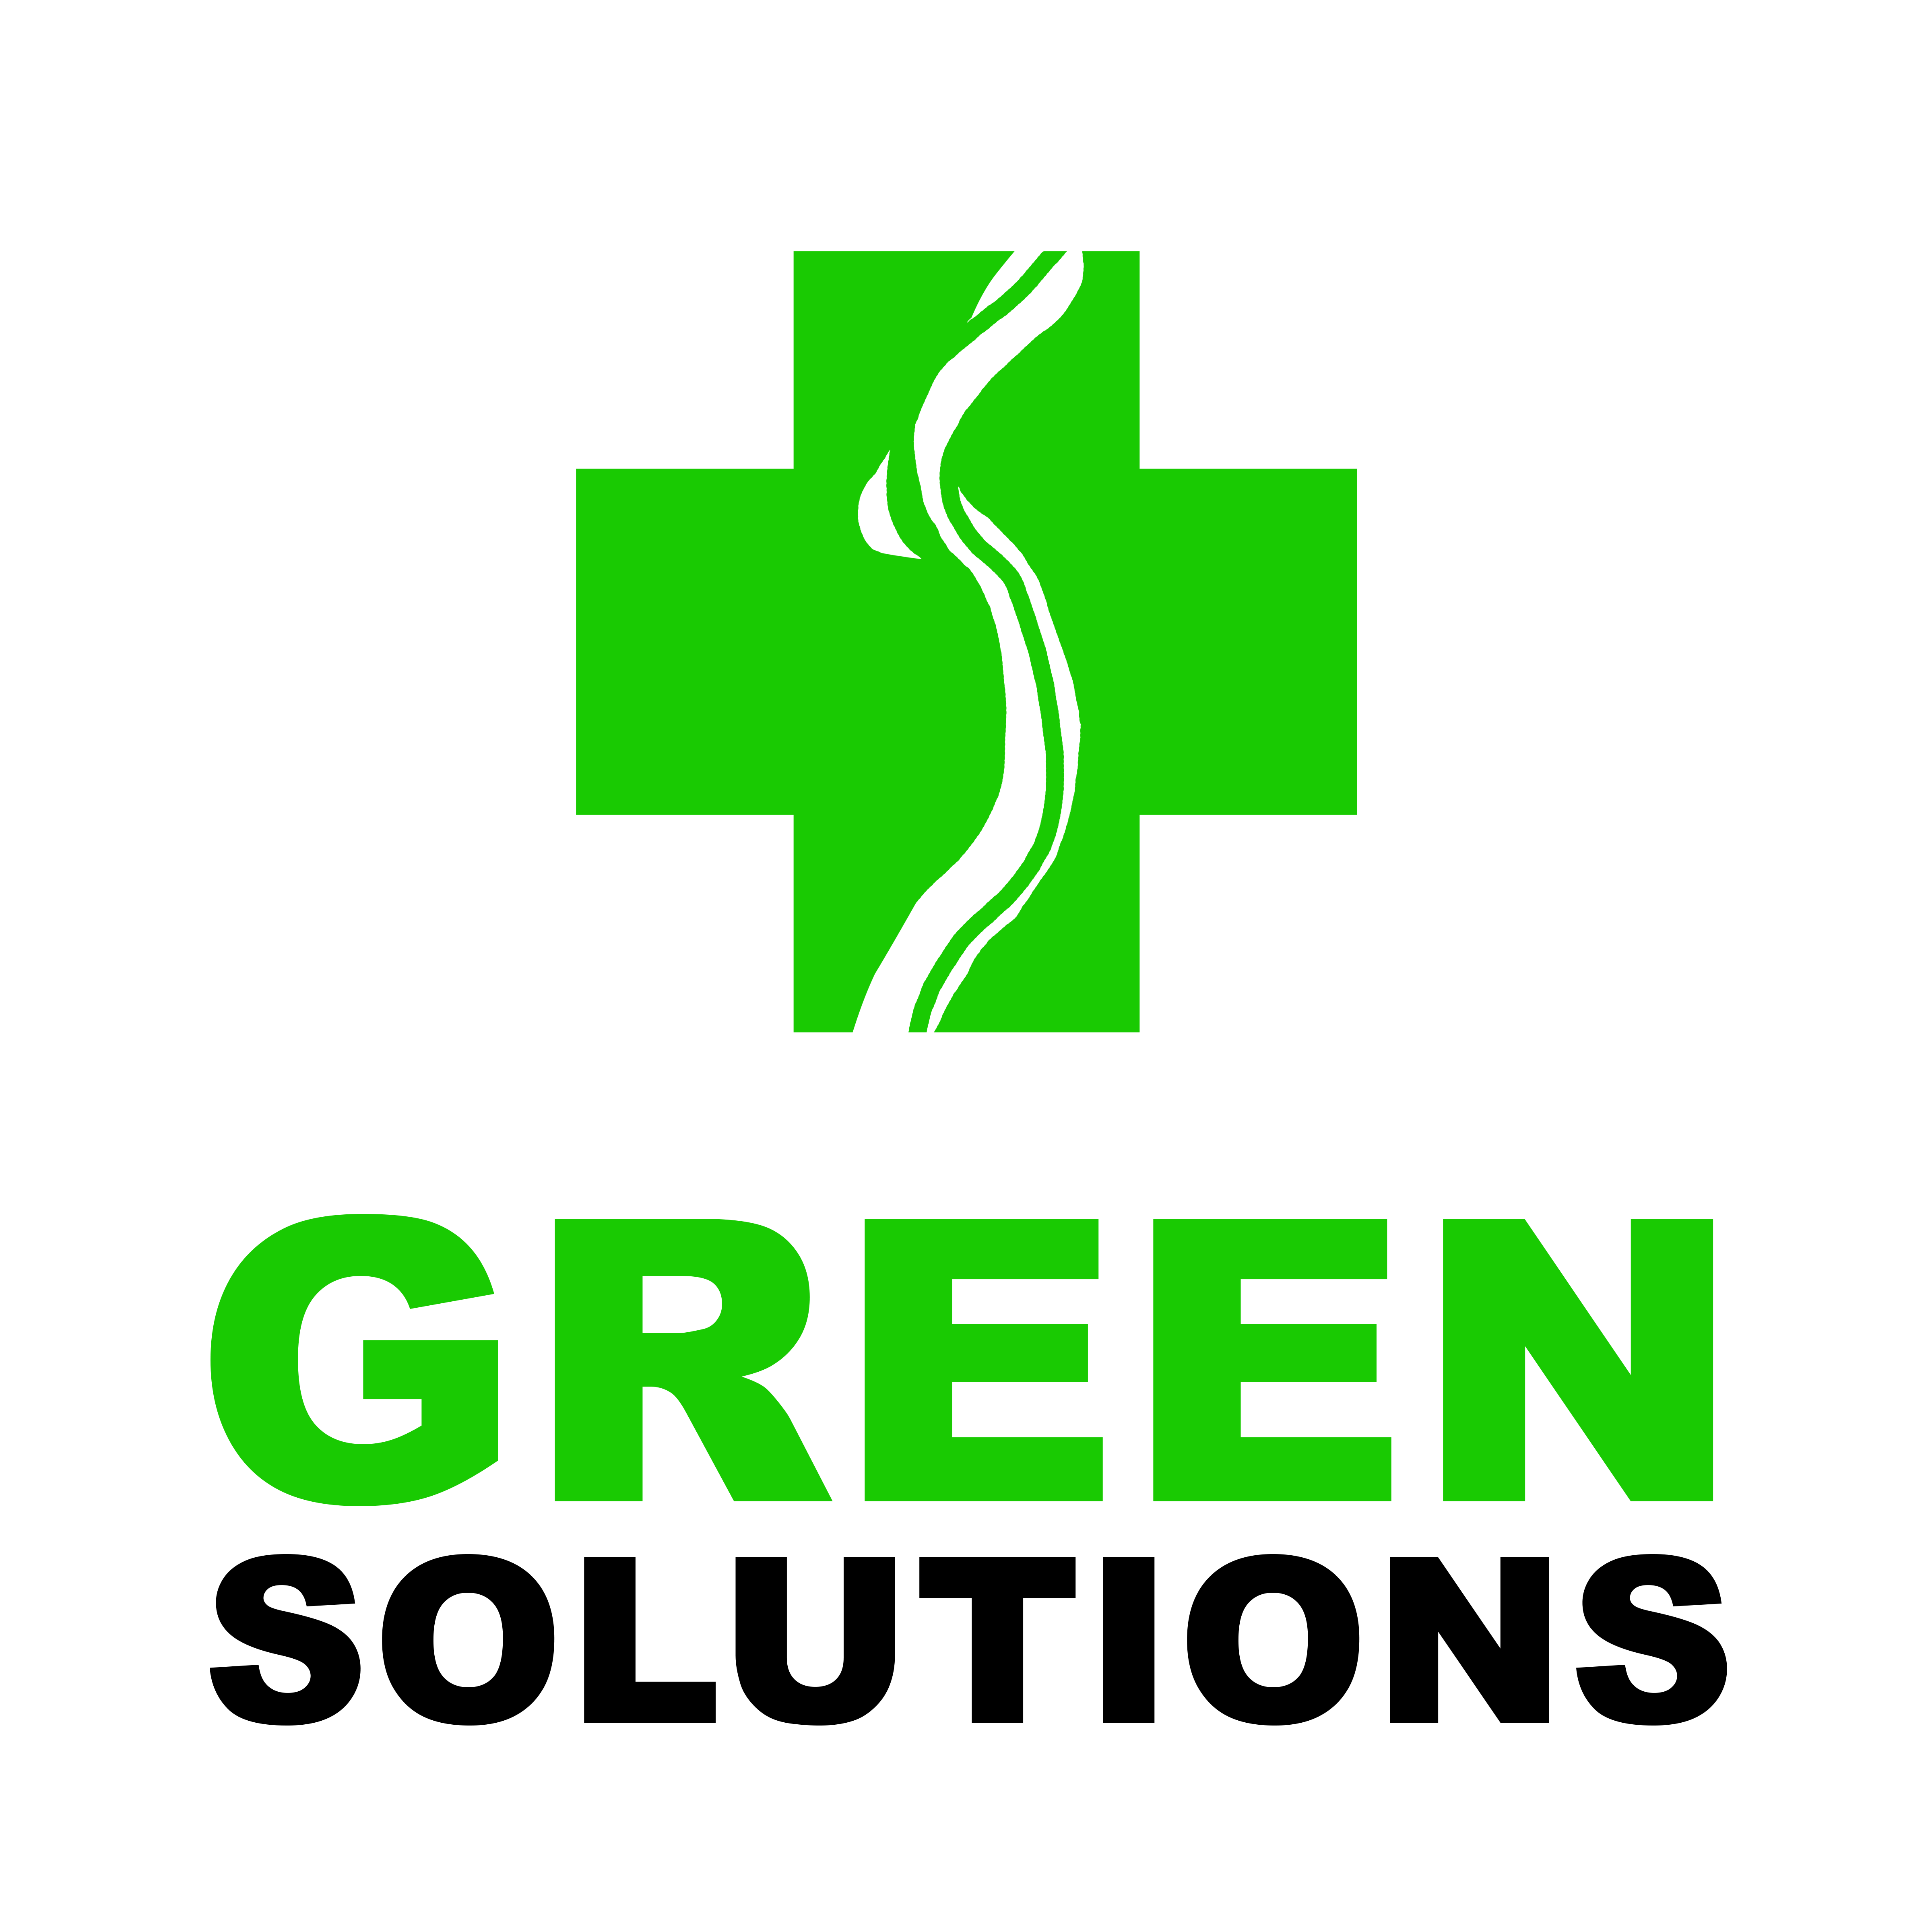 Green Solutions logo